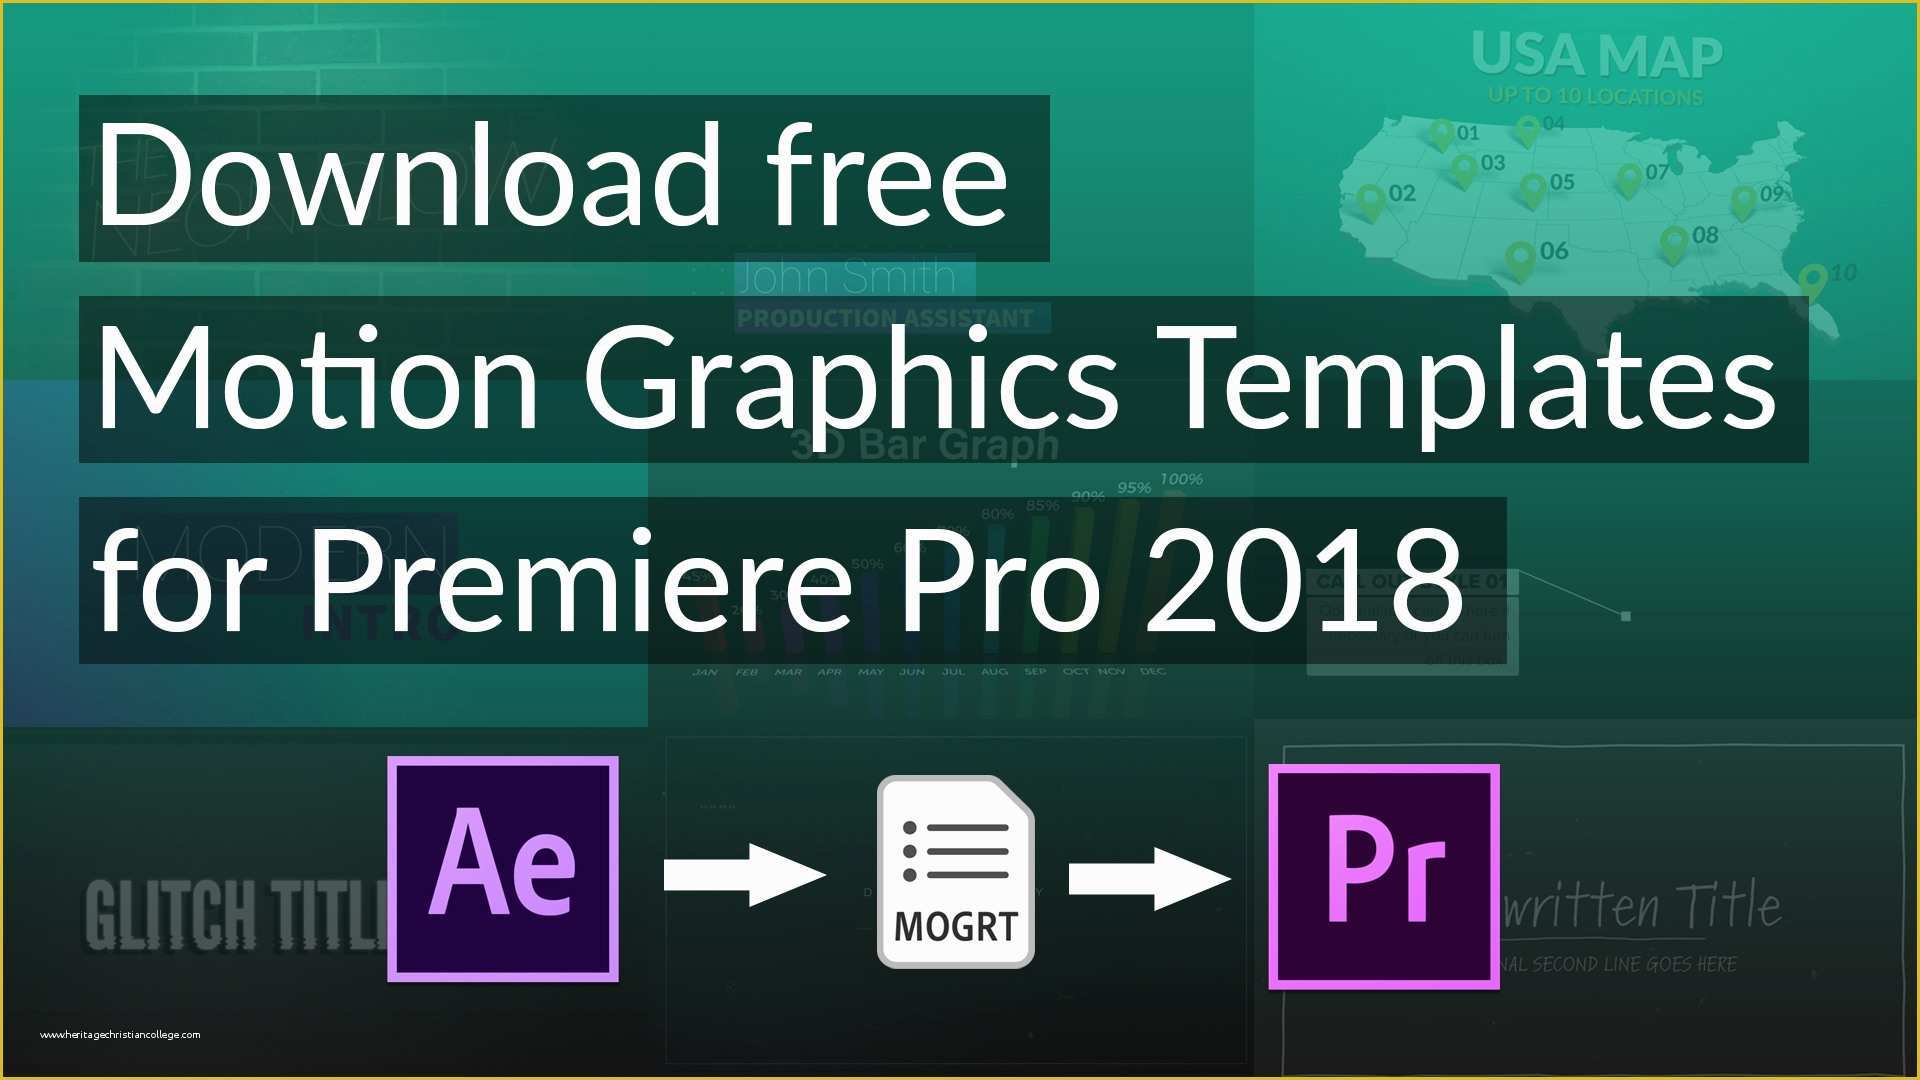 Adobe Premiere Pro Templates Free Of Free Fluxvfx Motion Graphics Templates On Adobe Stock